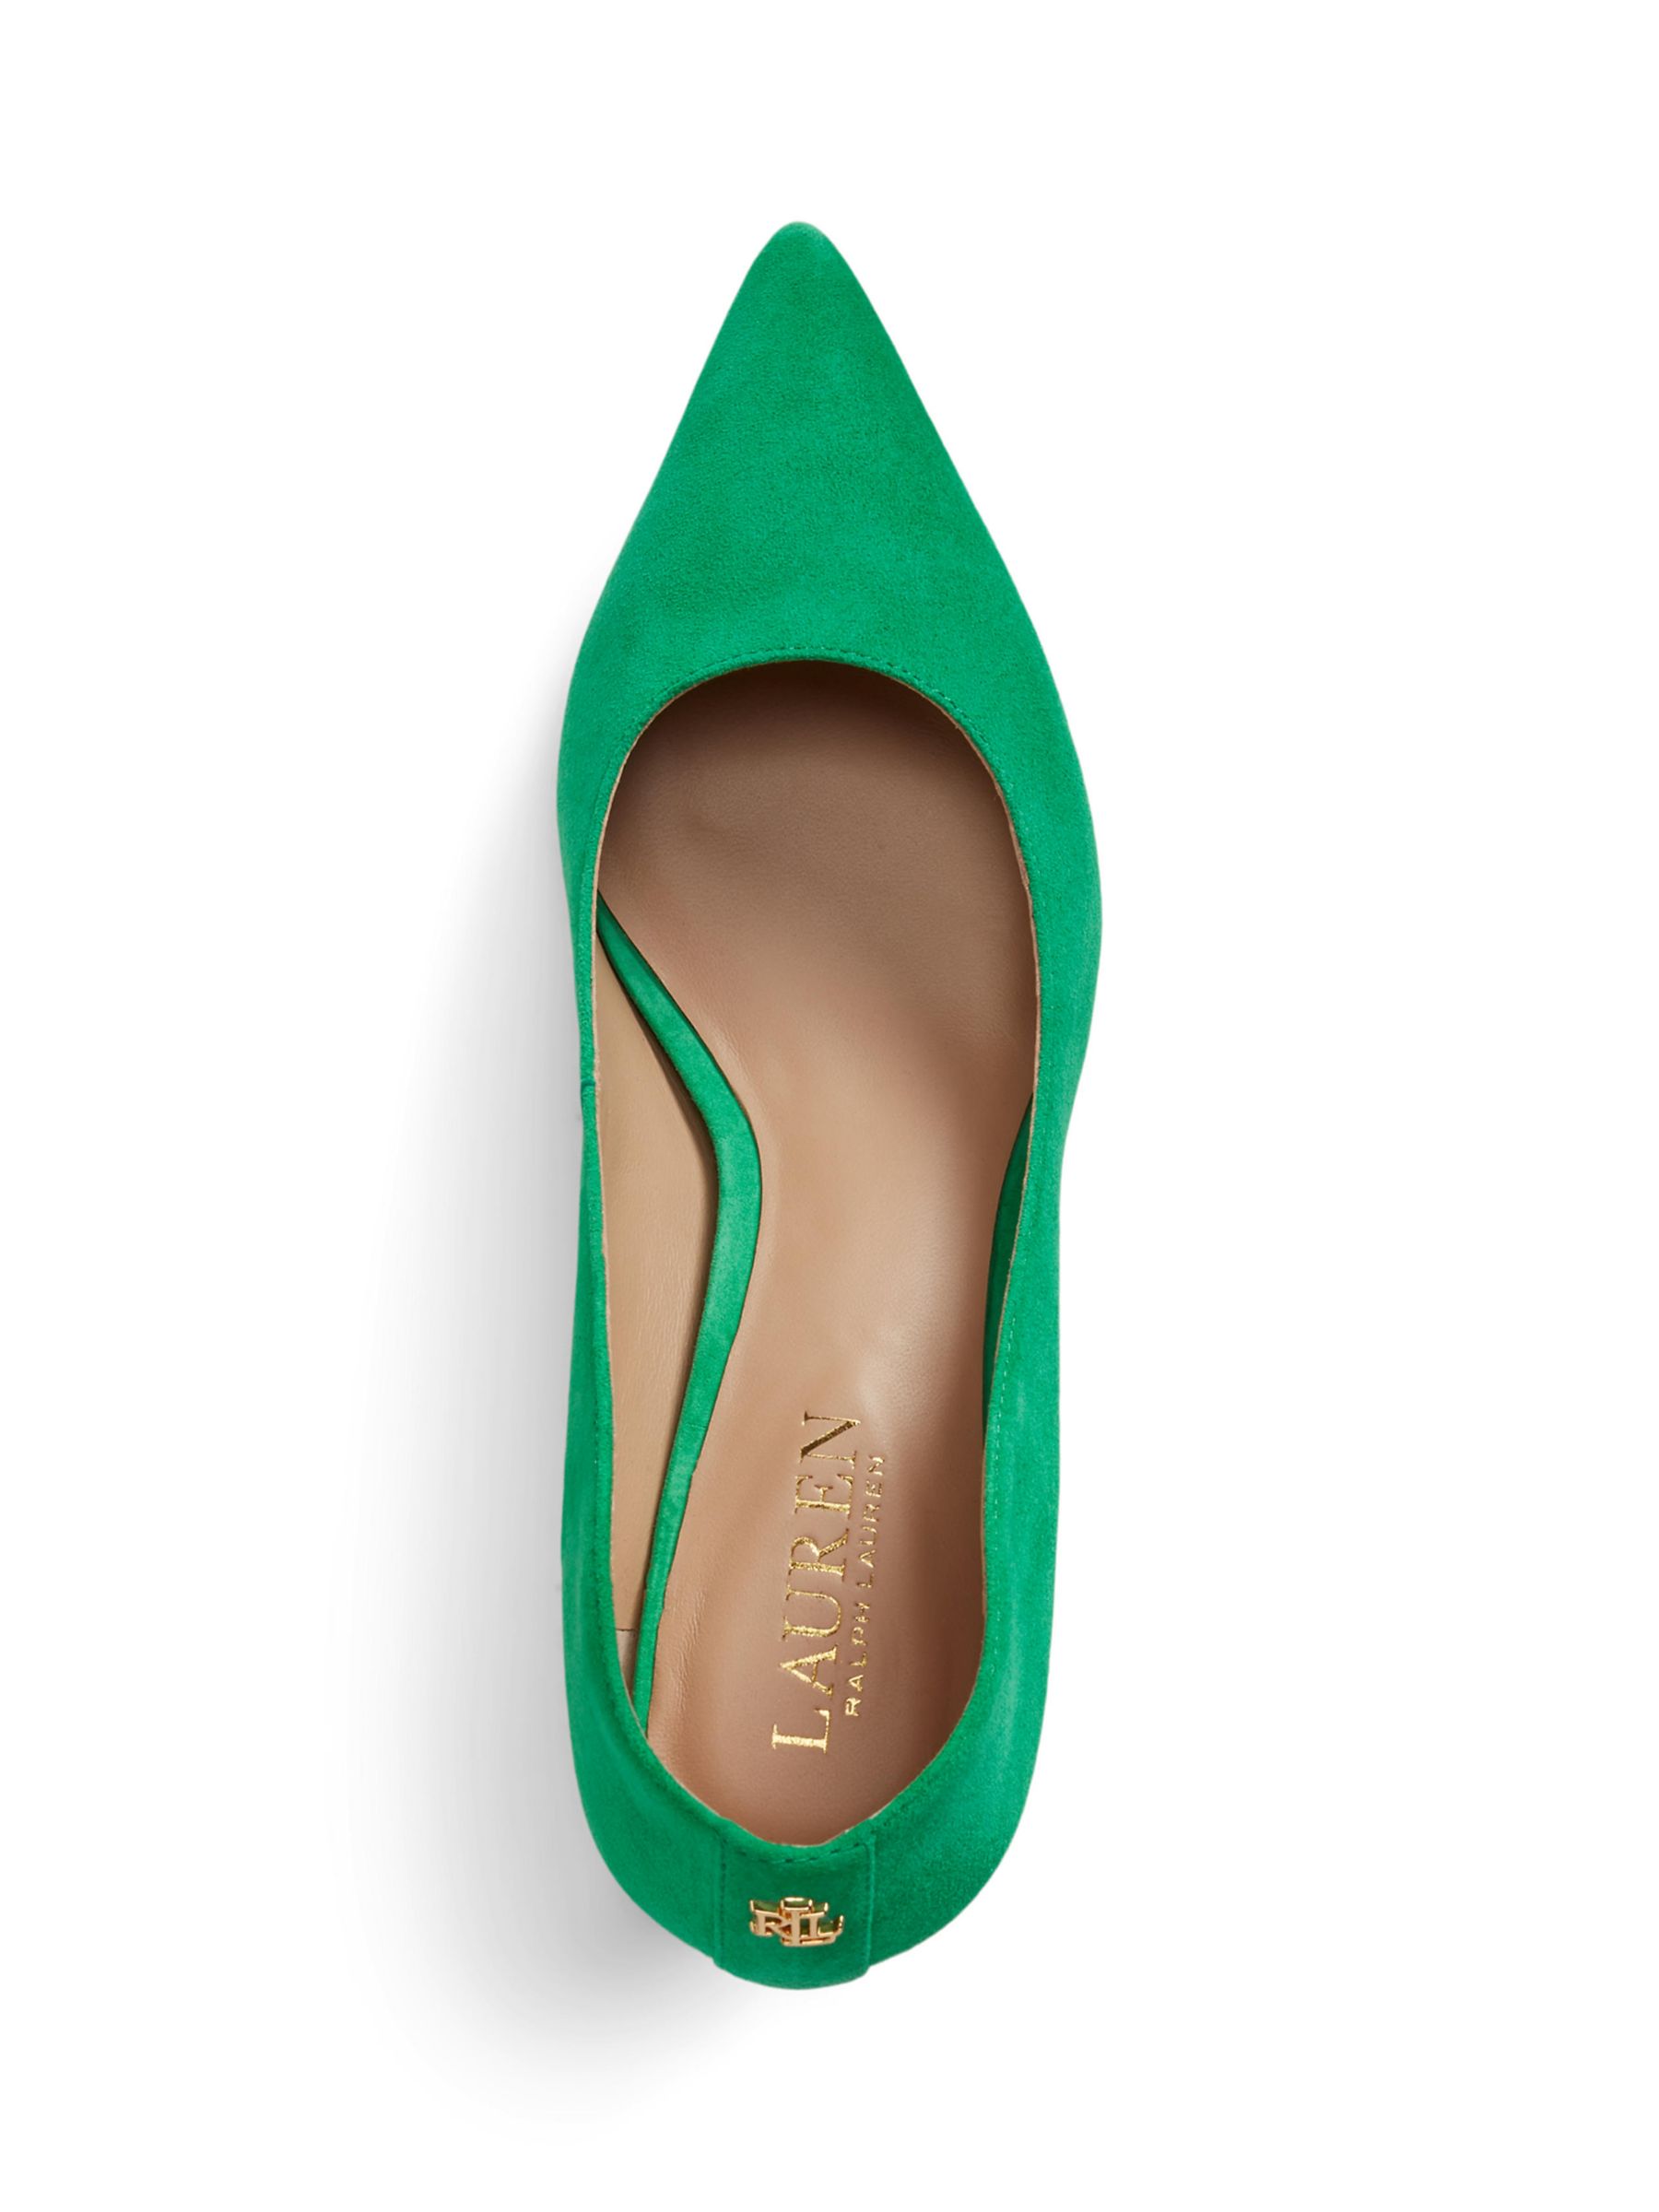 Lauren Ralph Lauren Adrienne Suede Point Toe Court Shoes, Green Topaz, 8